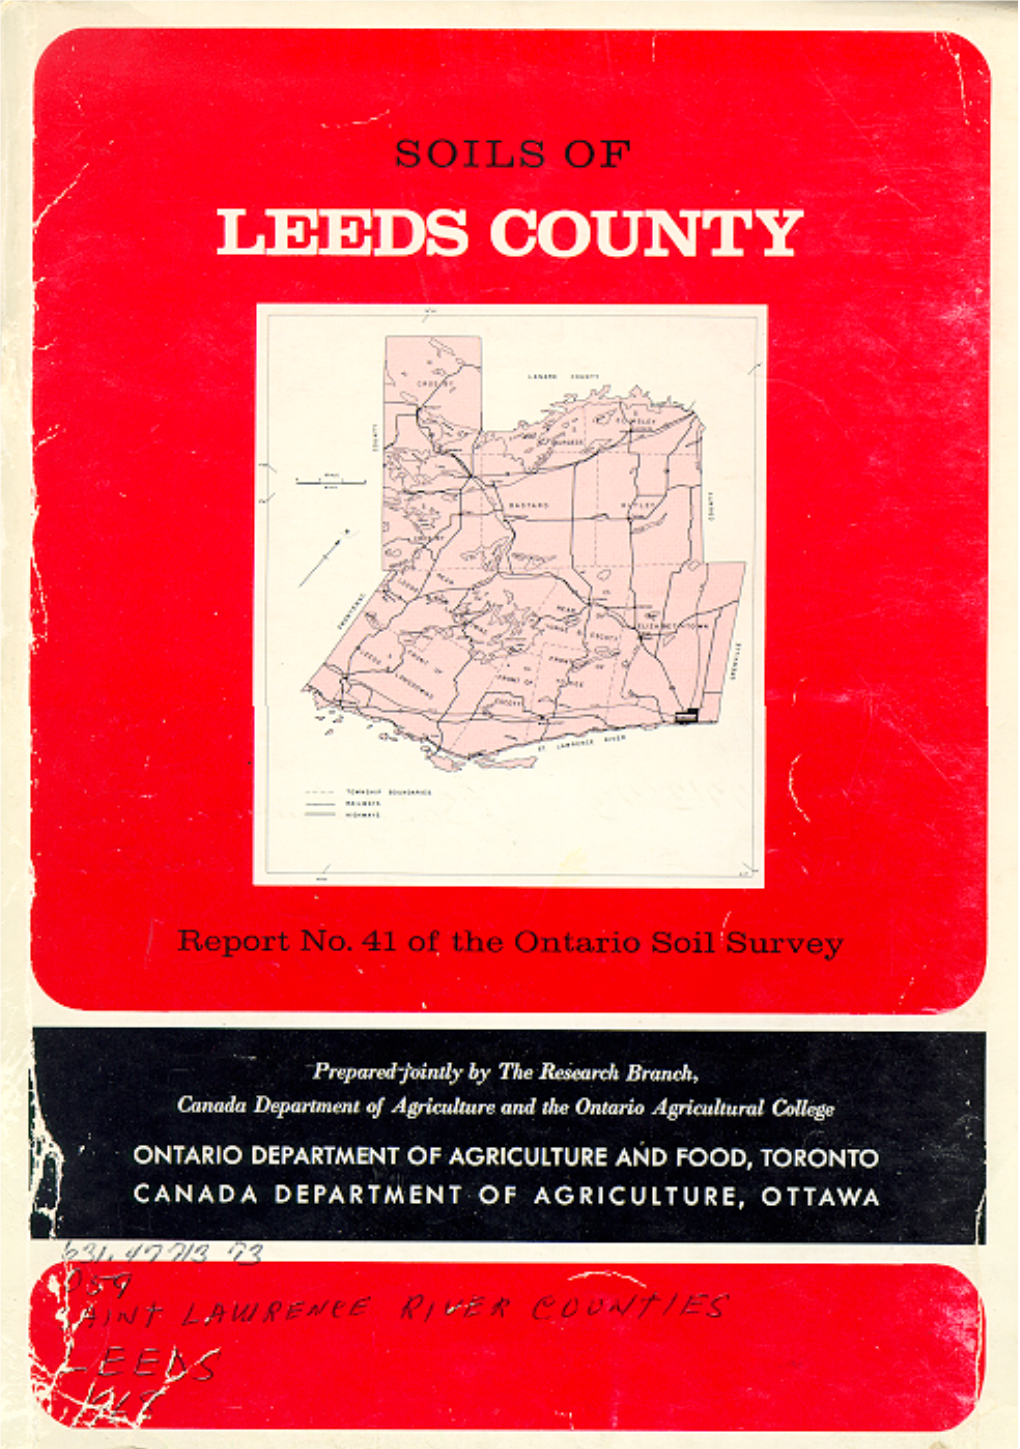 The Soils of Leeds County